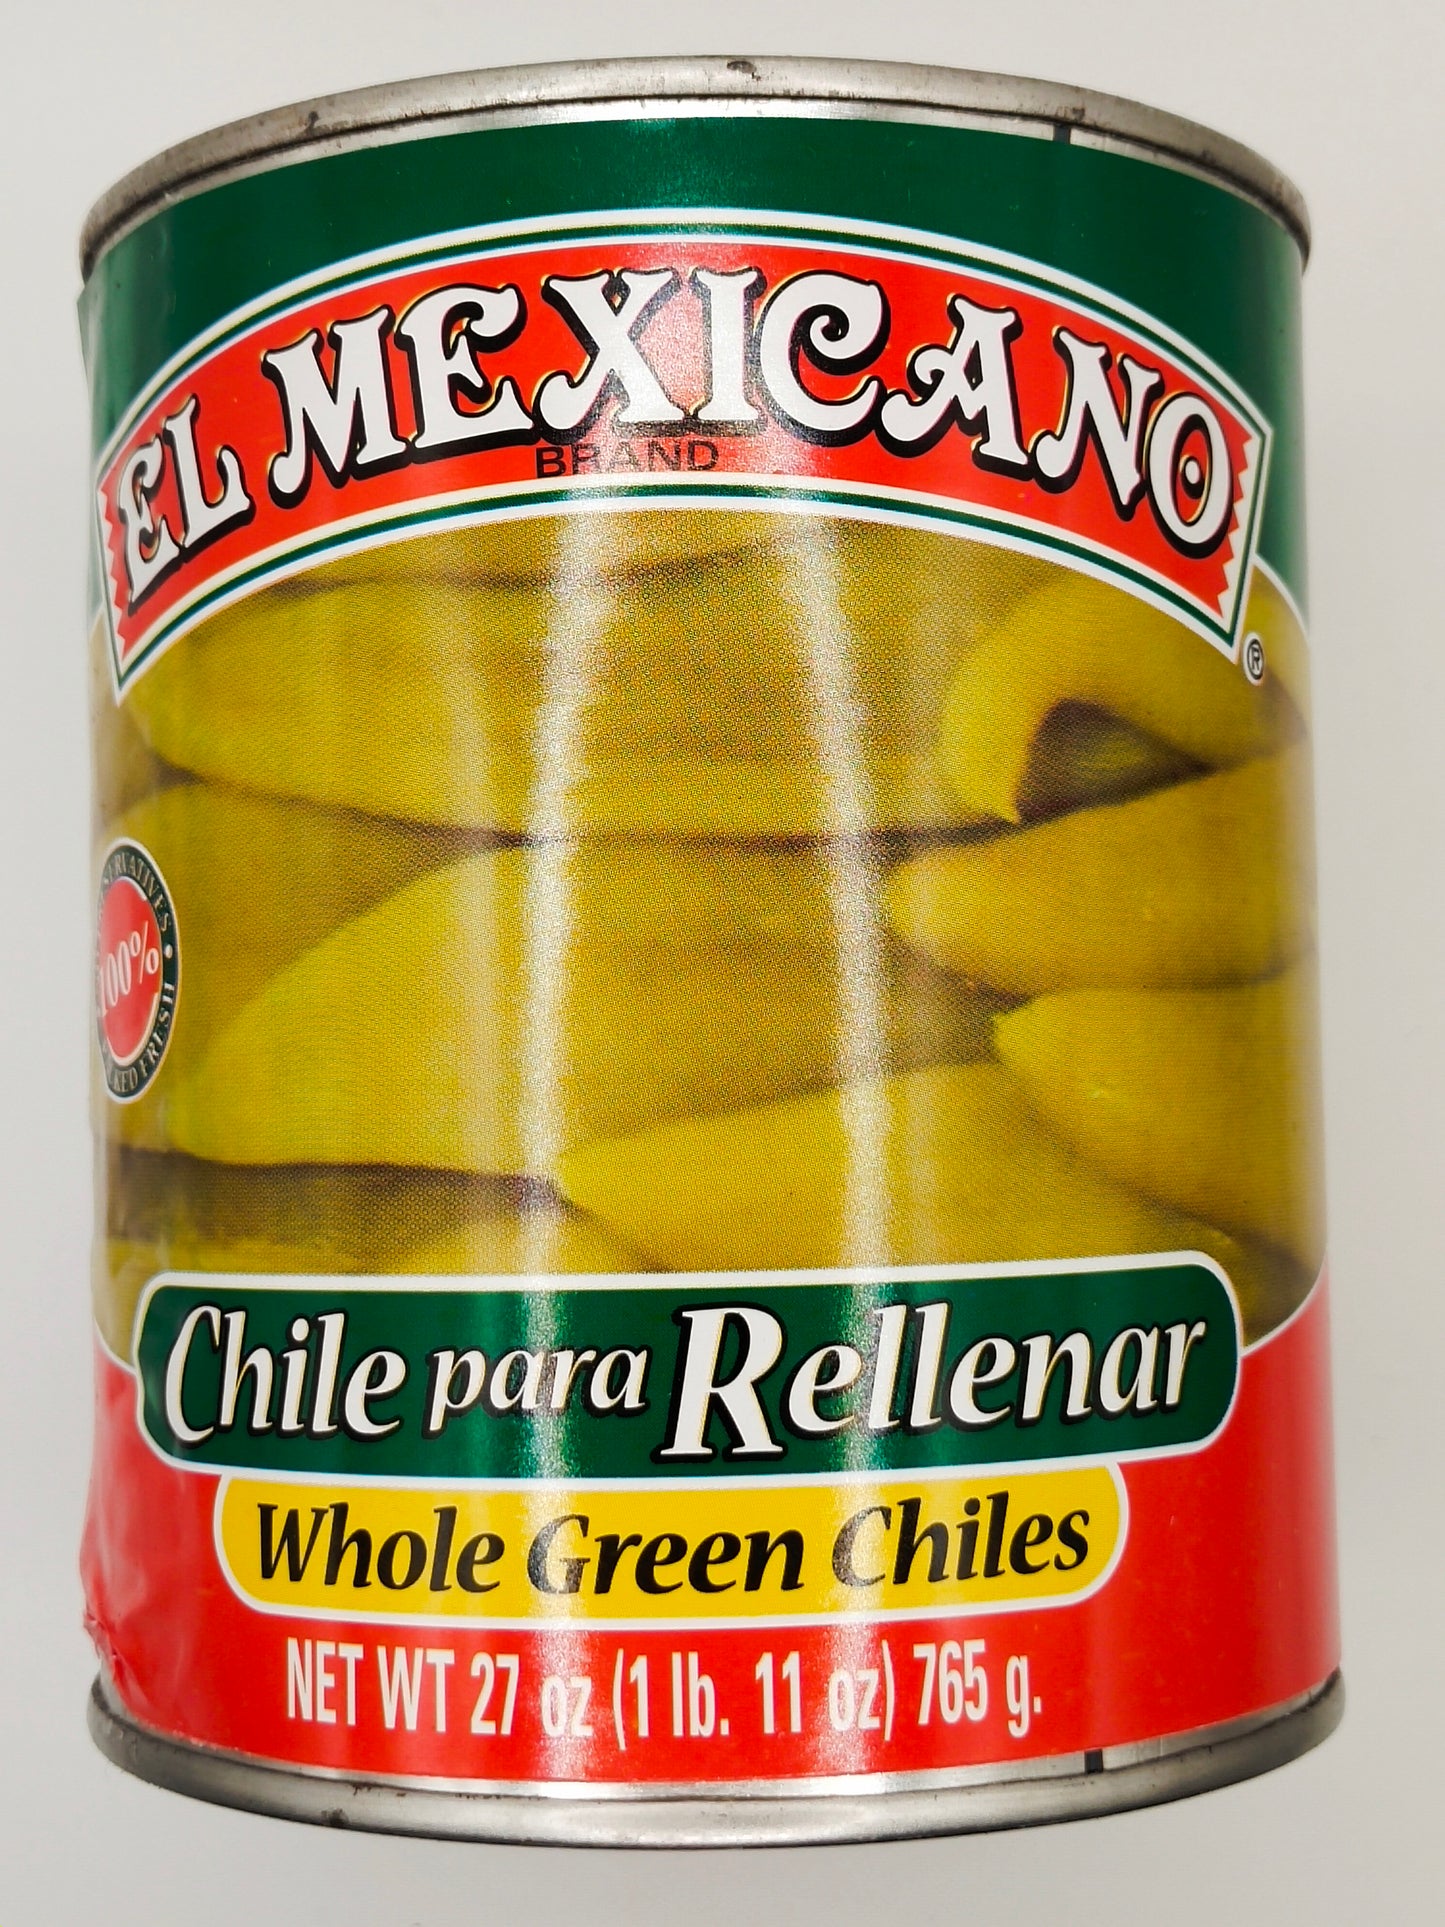 El Mexicano - Whole Green Chiles